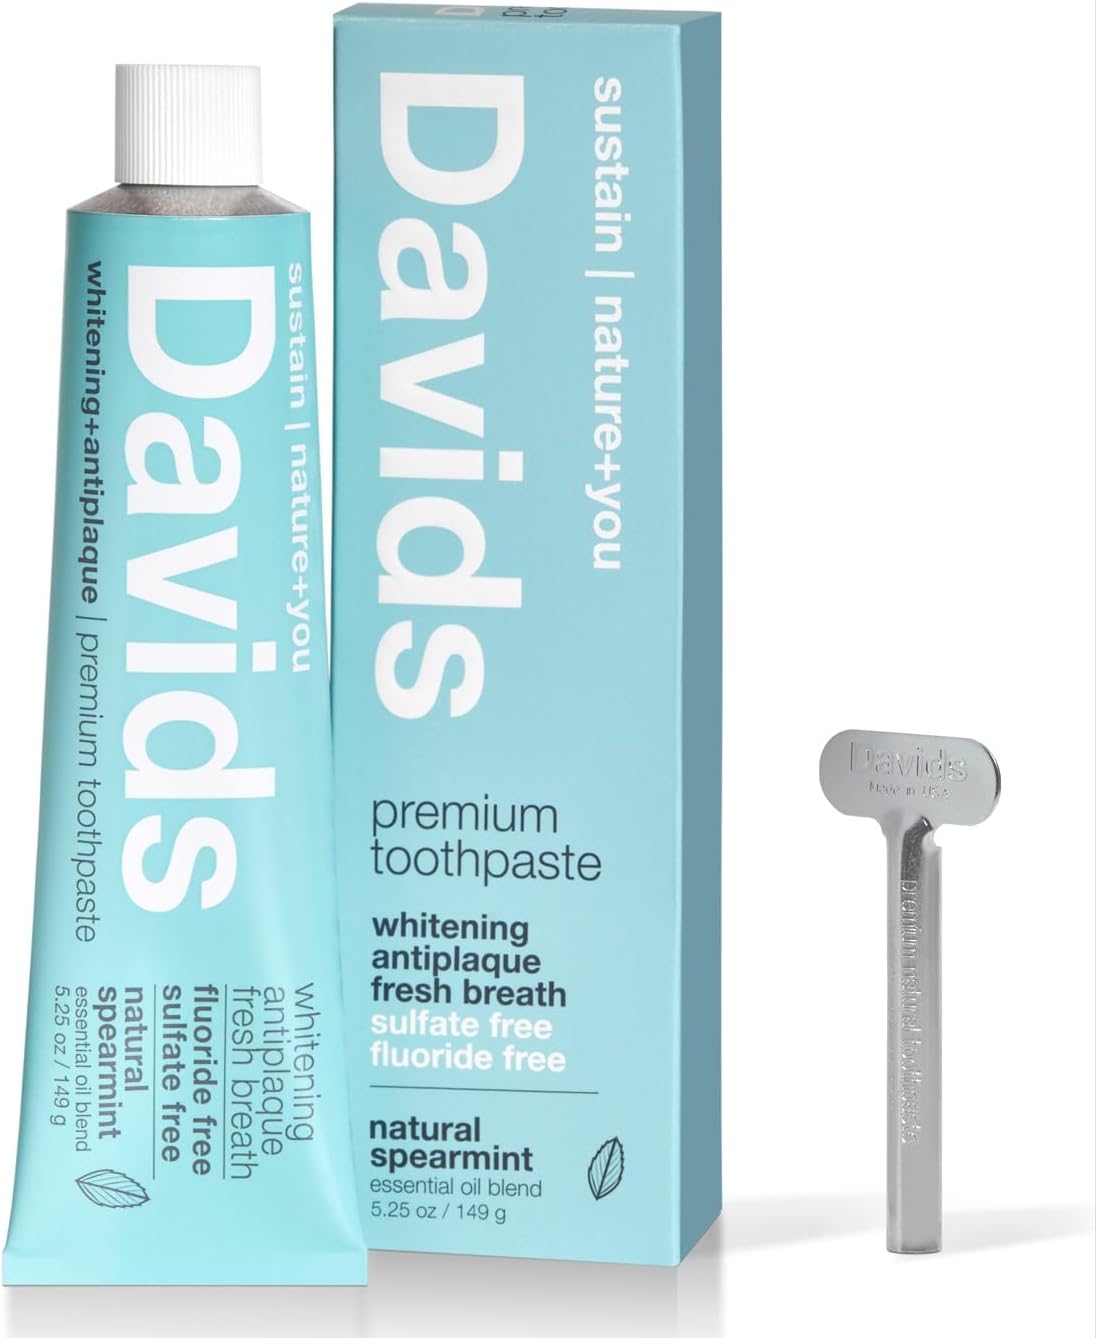 Davids Fluoride Free Whitening & Antiplaque Toothpaste, Natural Spearmint, Mouth & Gum Detox, SLS Free, EWG Verified Clean & Non-Toxic Ingredients, 5.25oz, Made in USA